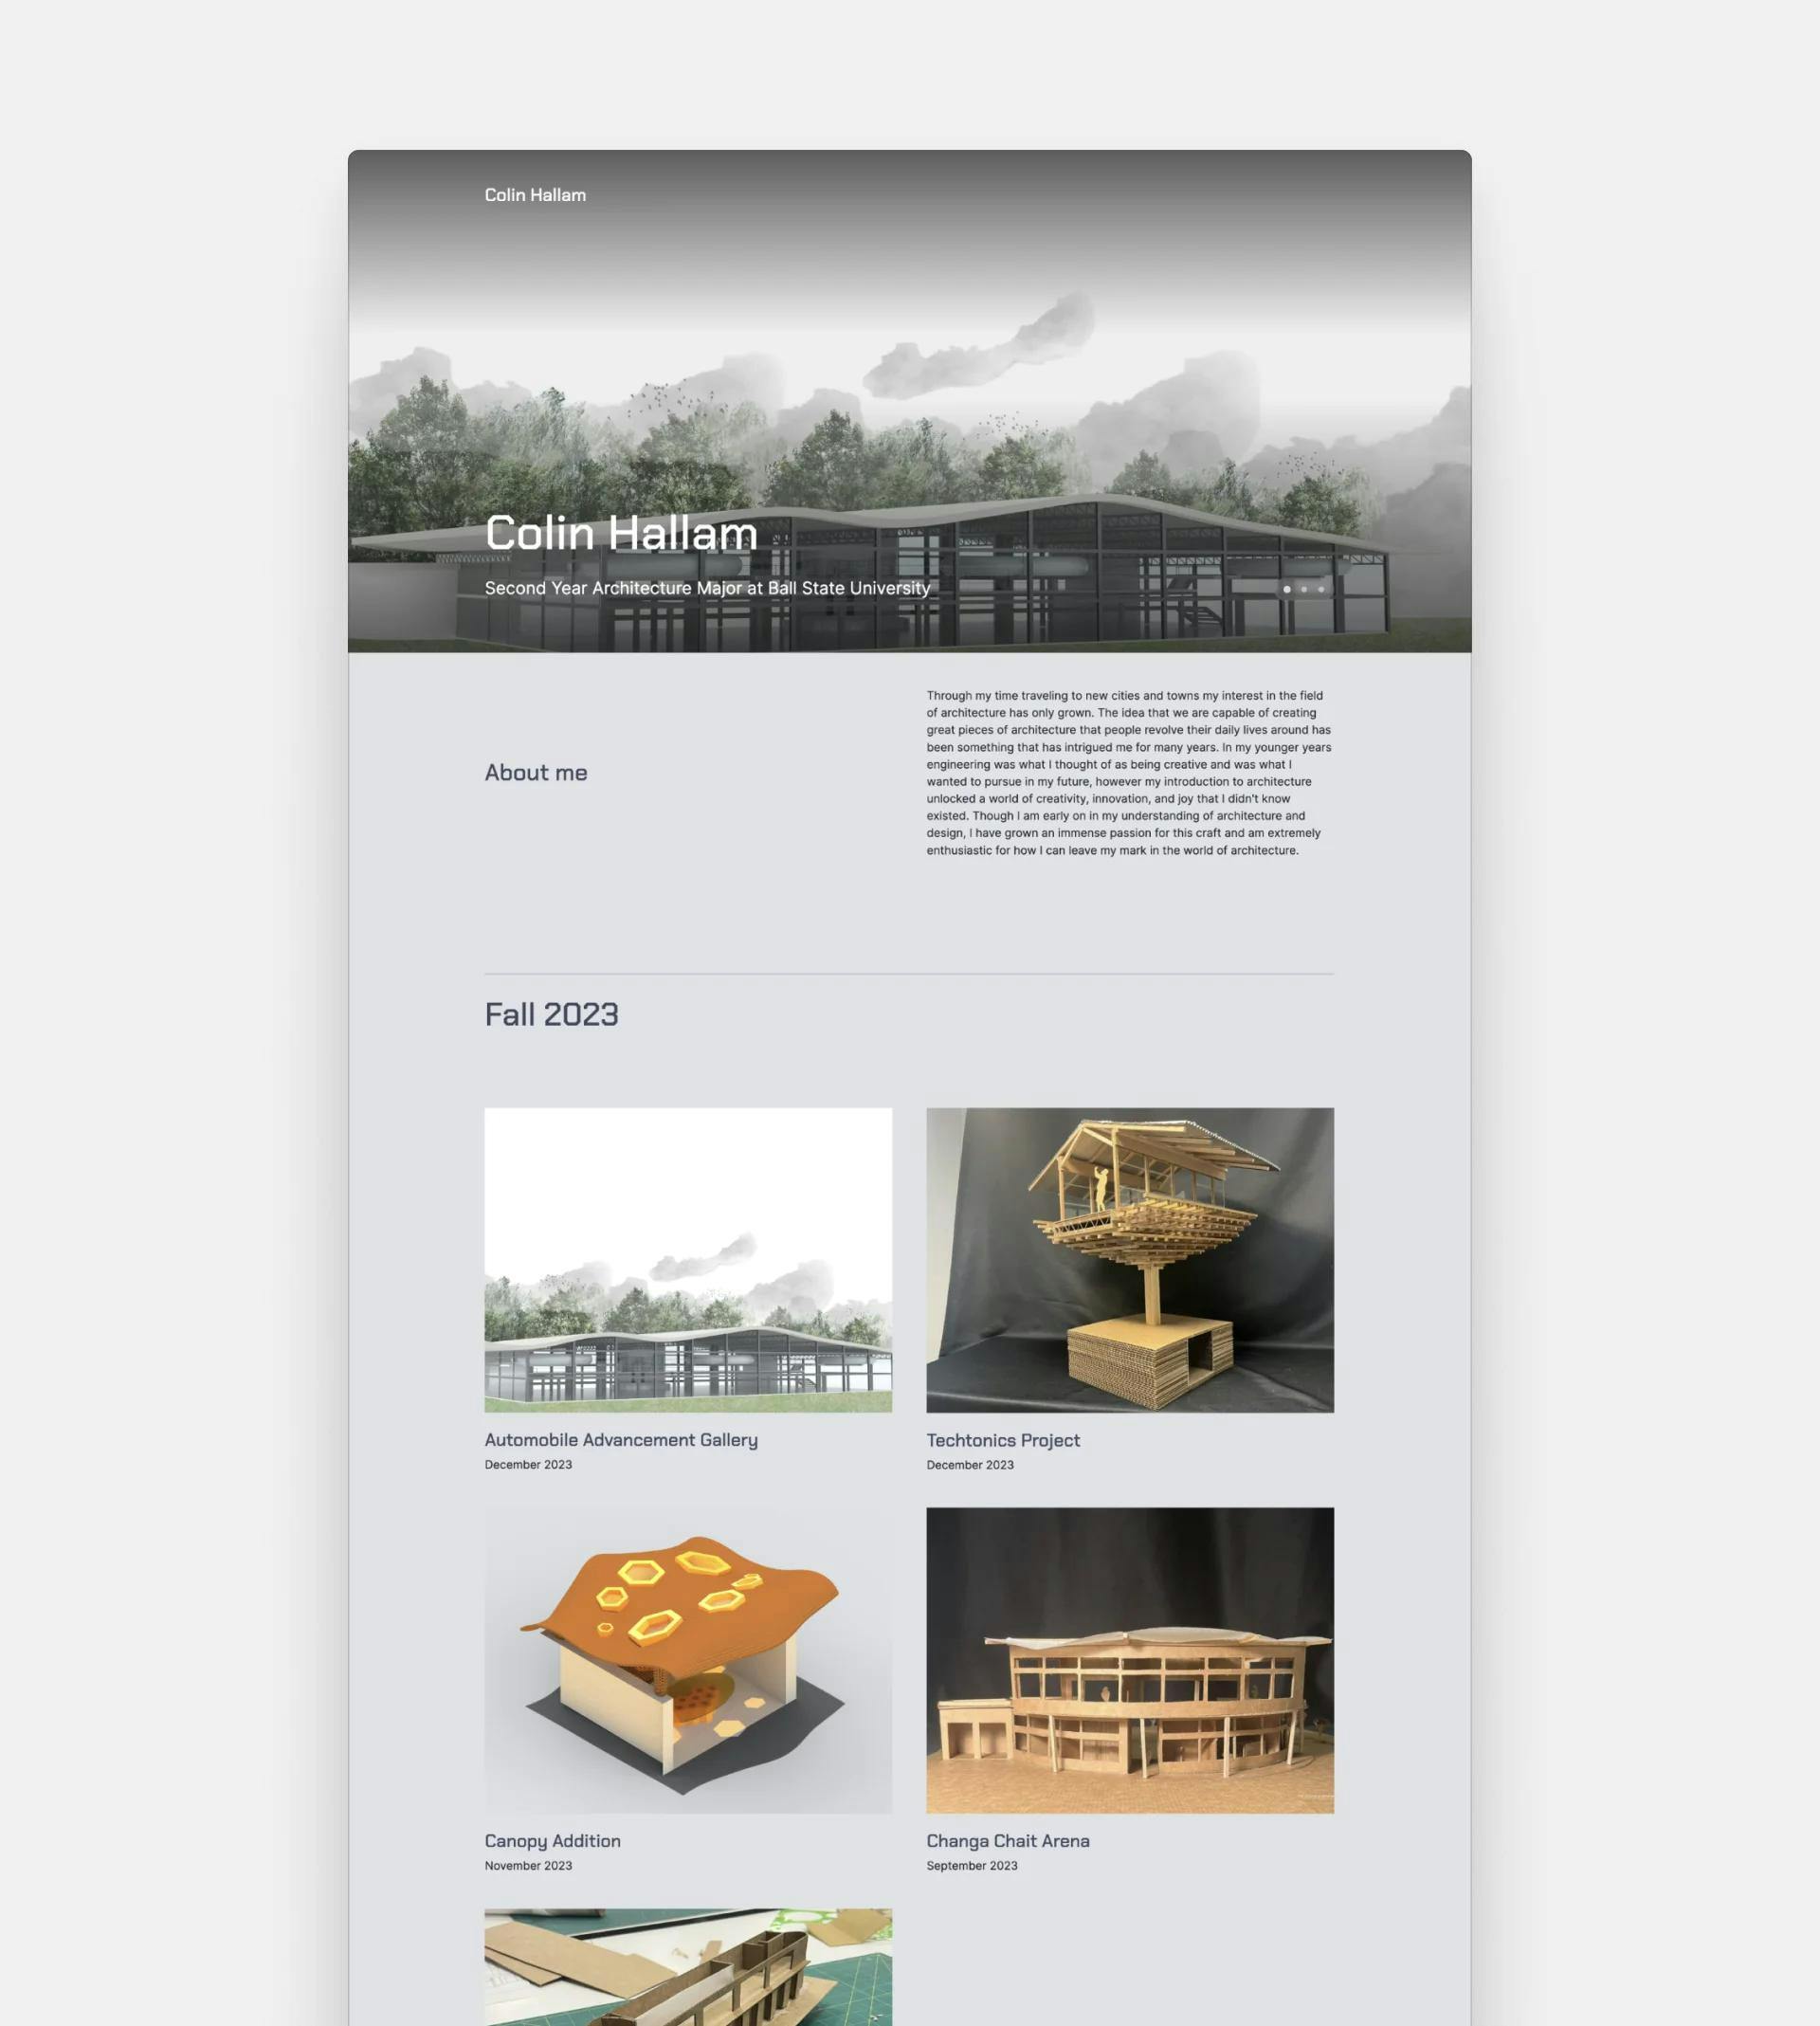 Screenshot of Colin Hallam's undergraduate architecture portfolio website with a grey background